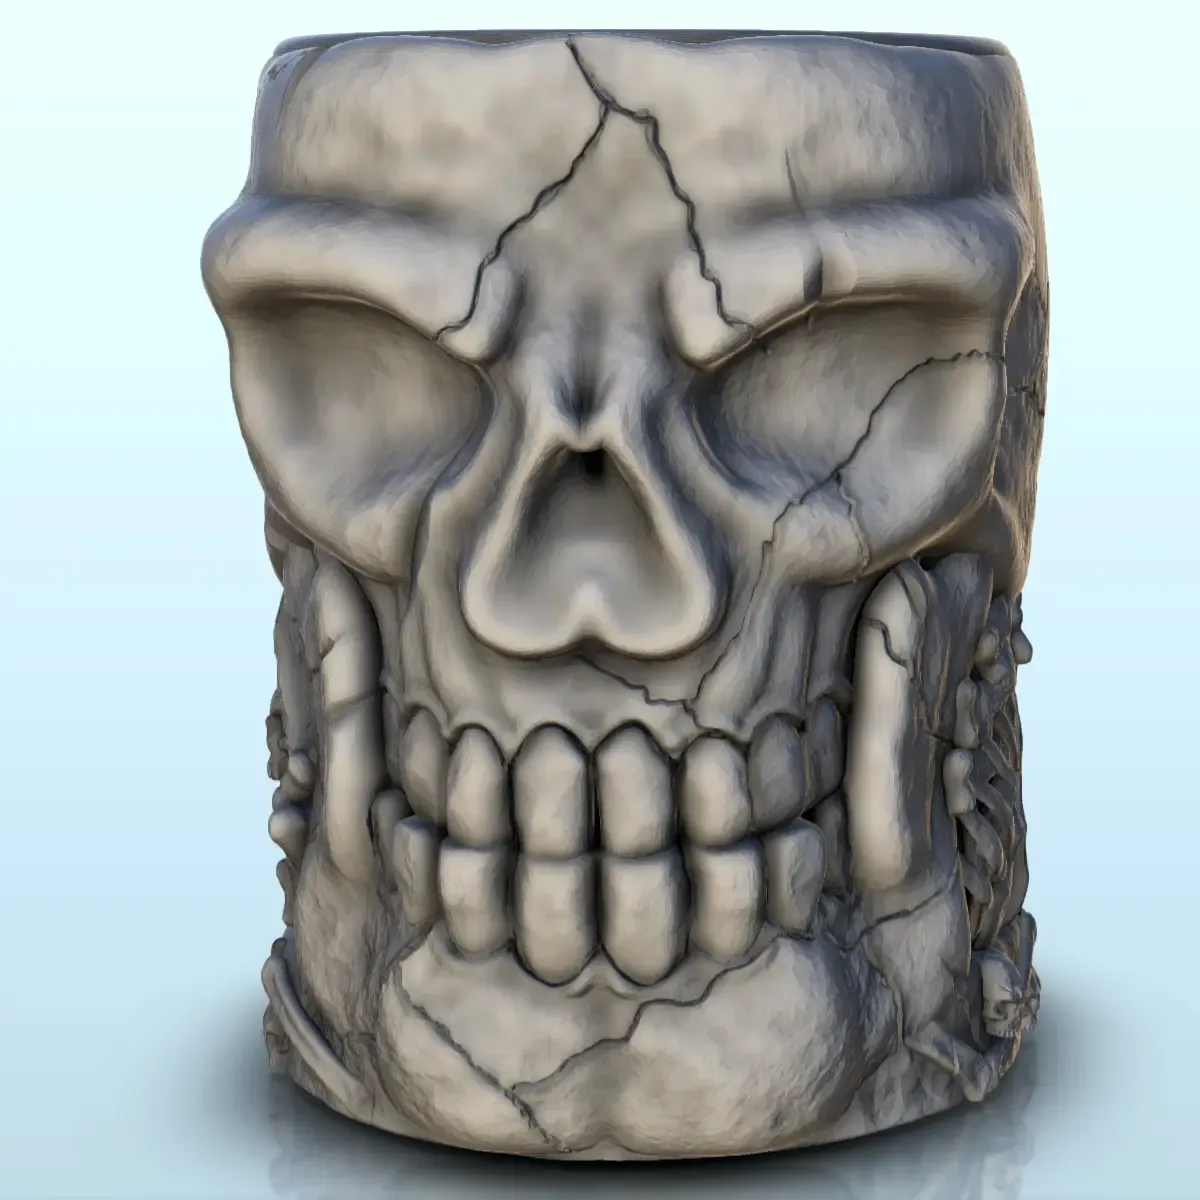 Skull and bones dice mug (2) - beer can holder